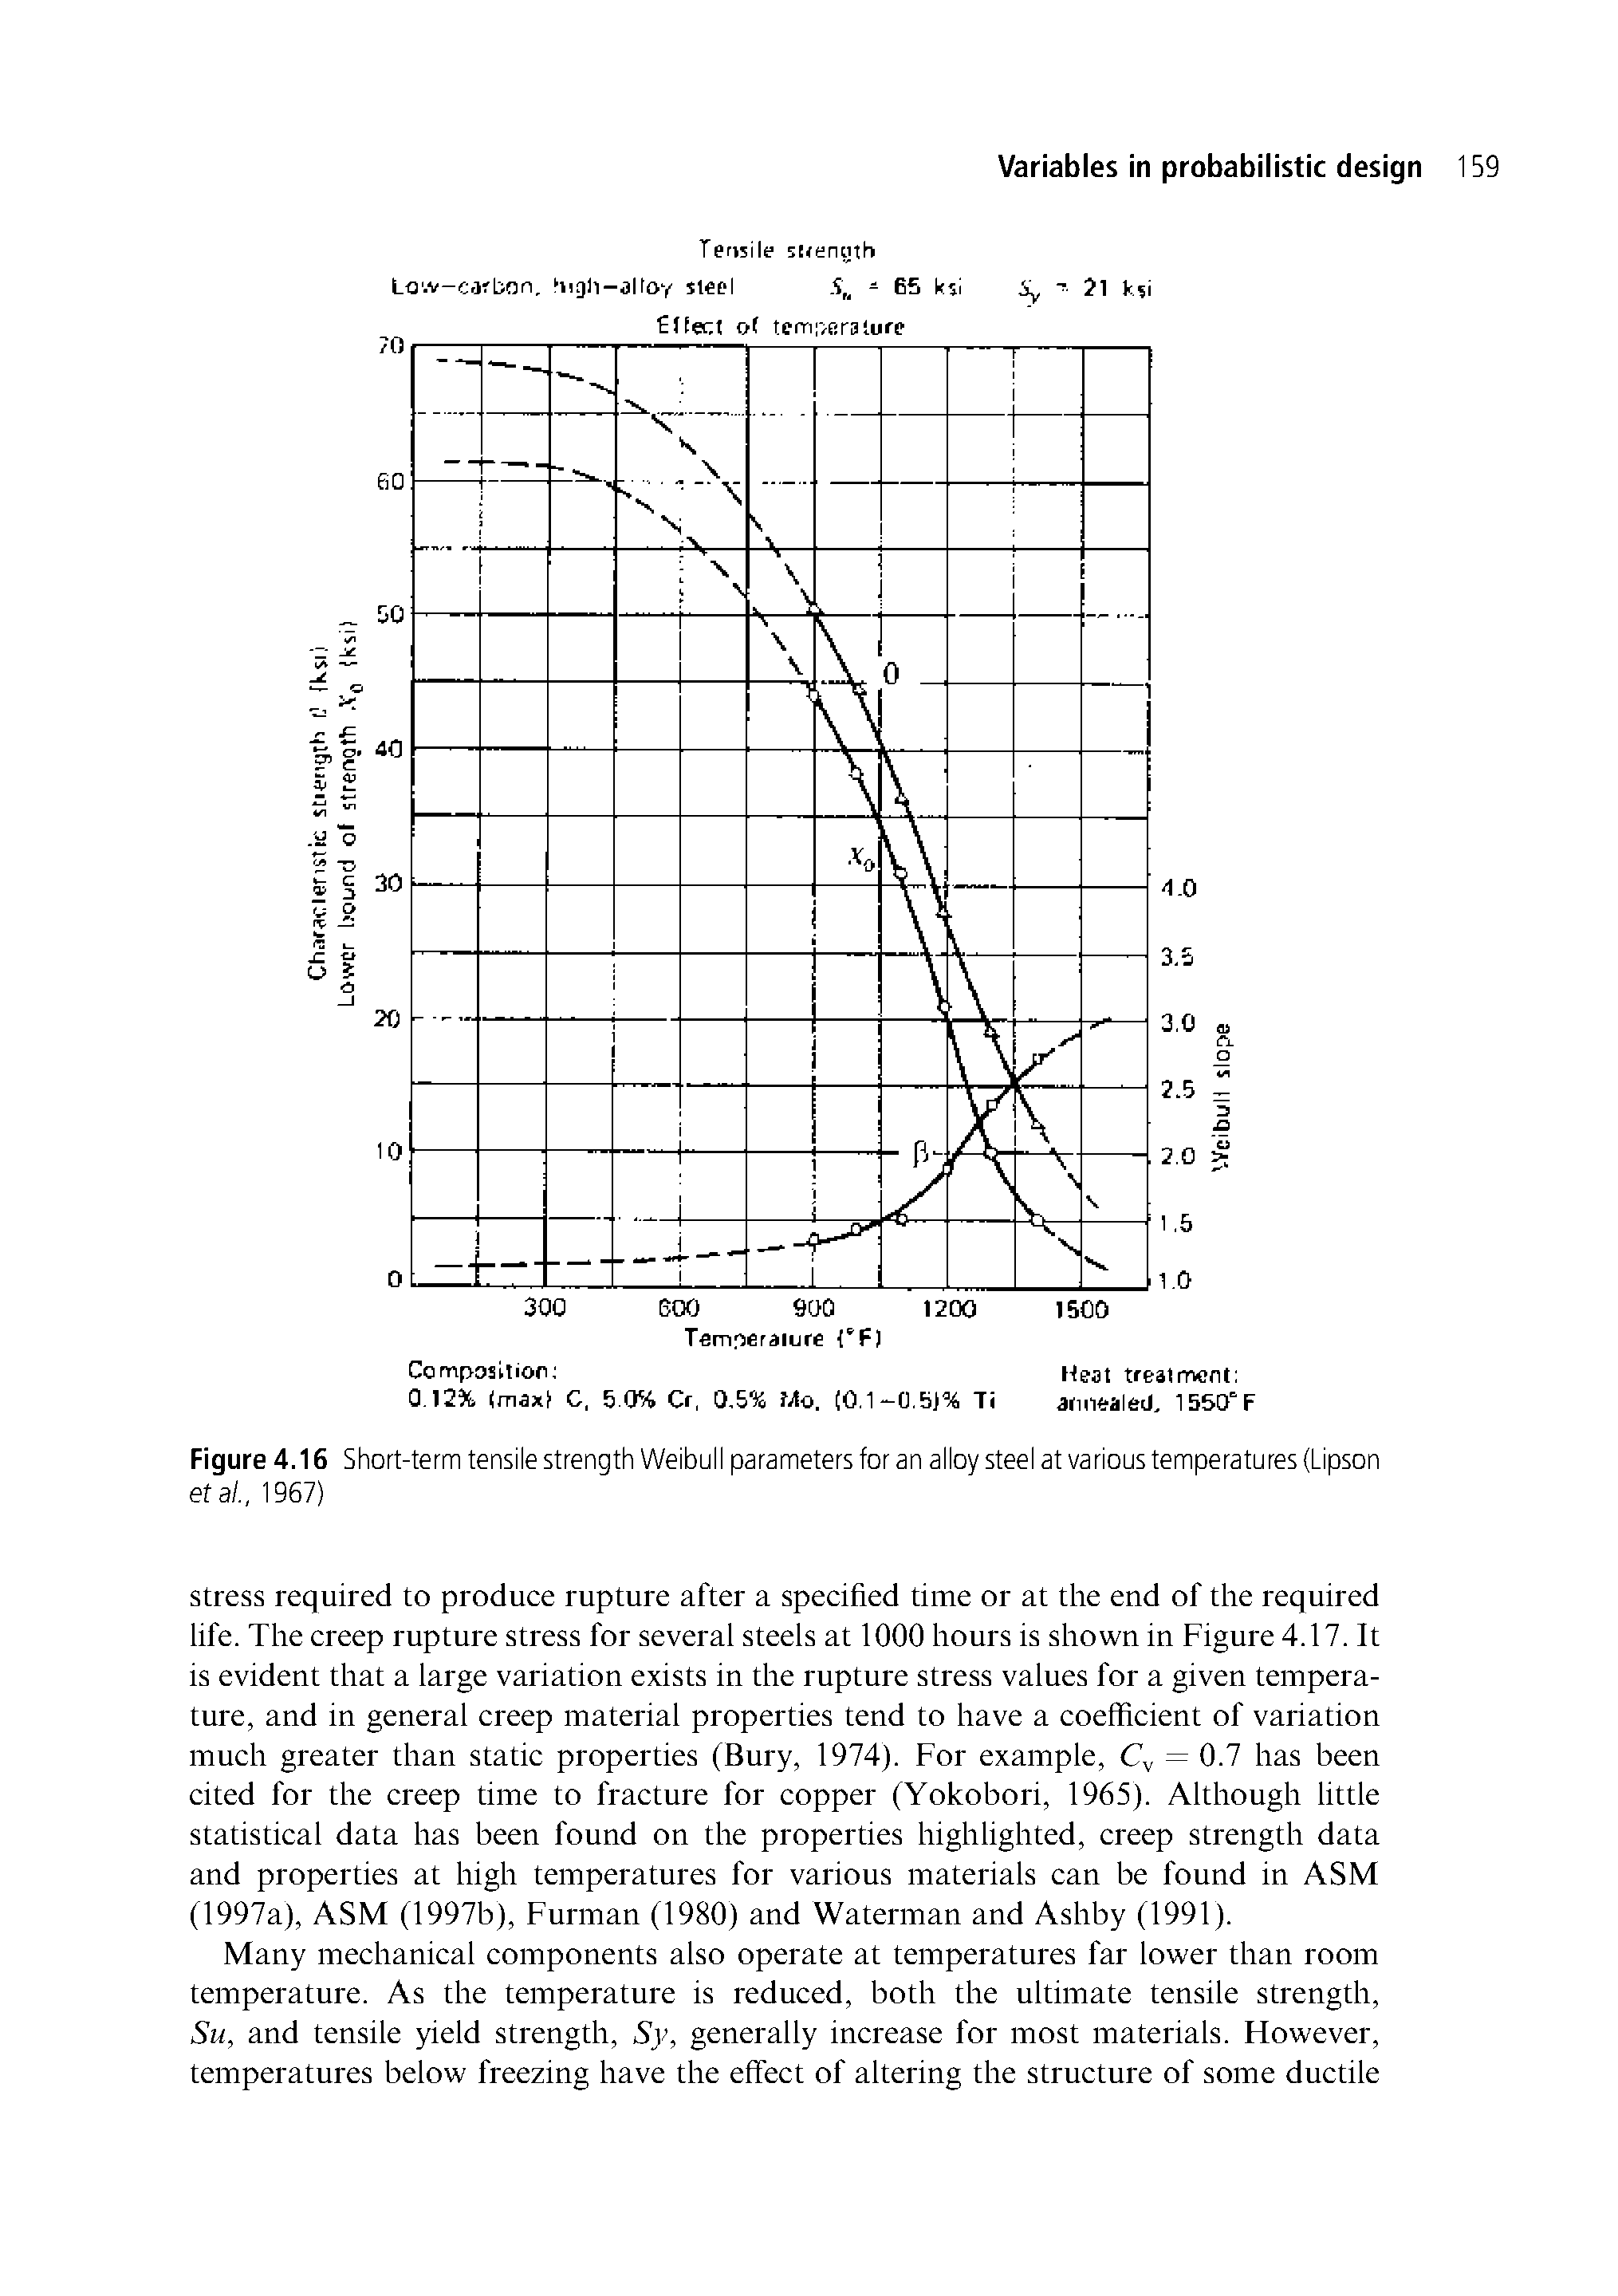 Figure 4.16 Short-term tensile strength Weibull parameters for an alloy steel at various temperatures (Upson eta/., 1967)...